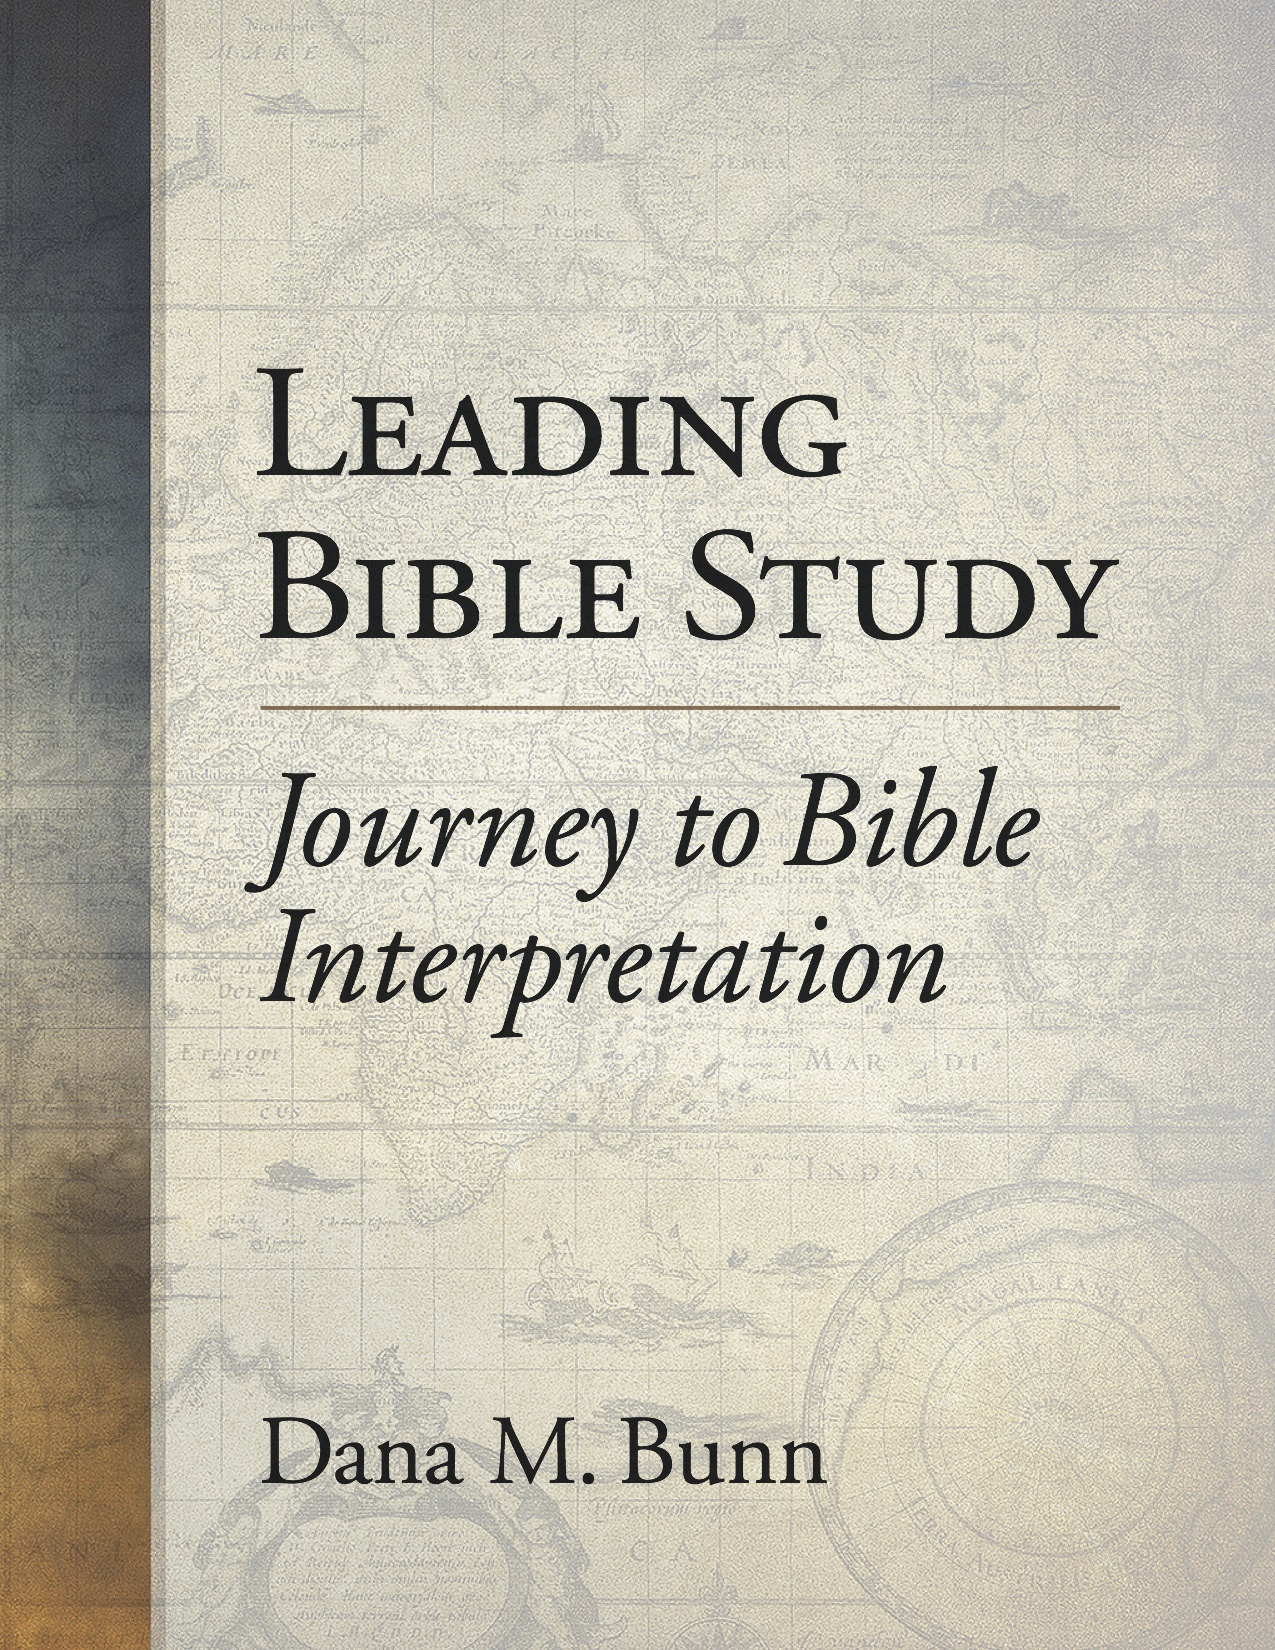 Leading Bible Study